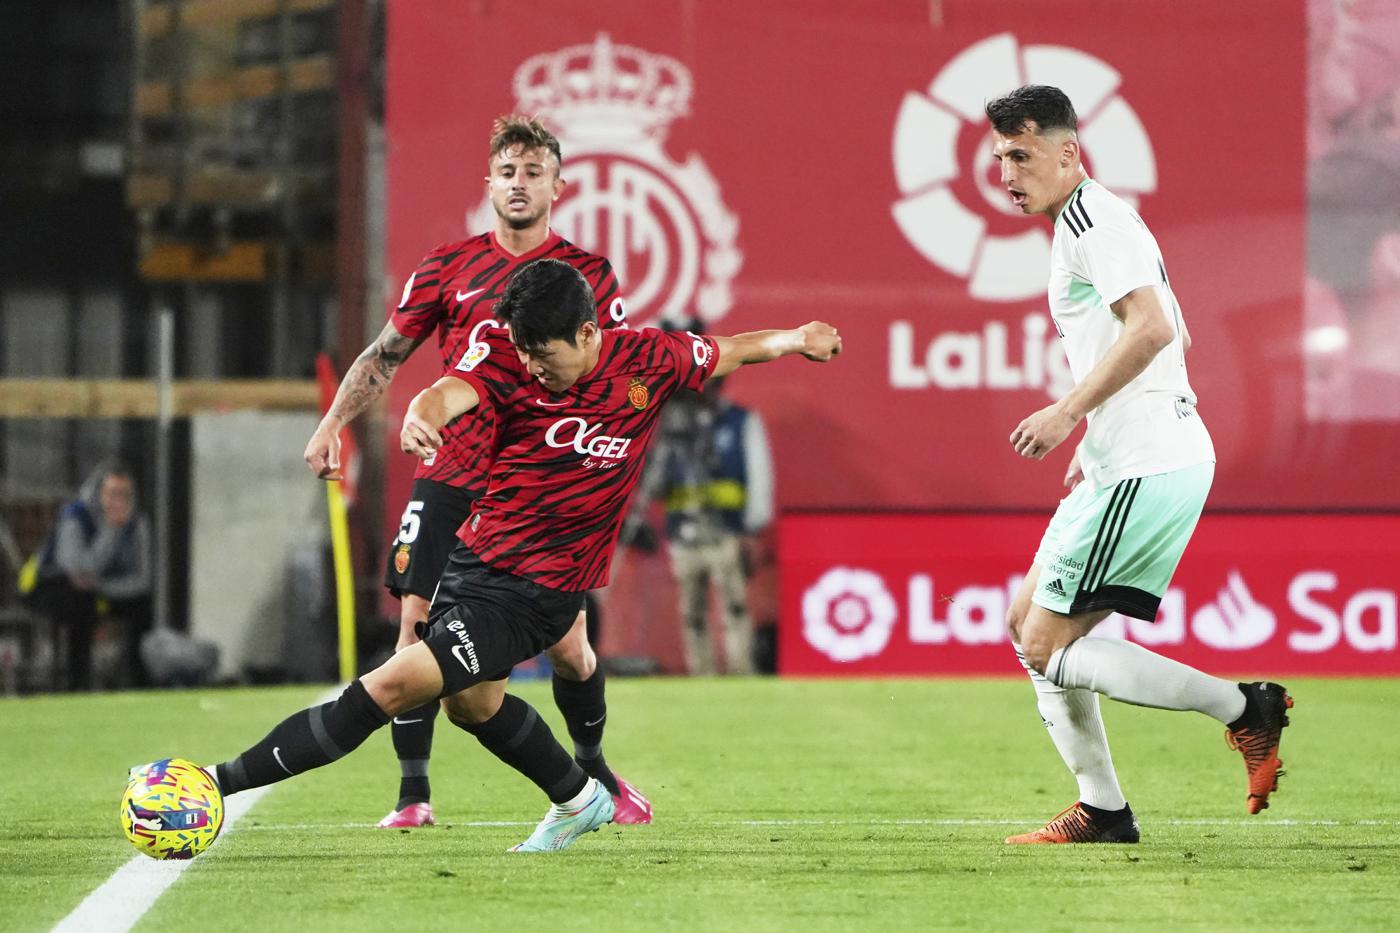 Mallorca - Osasuna - 0:0. Spanish Championship, 27th round. Match review, statistics